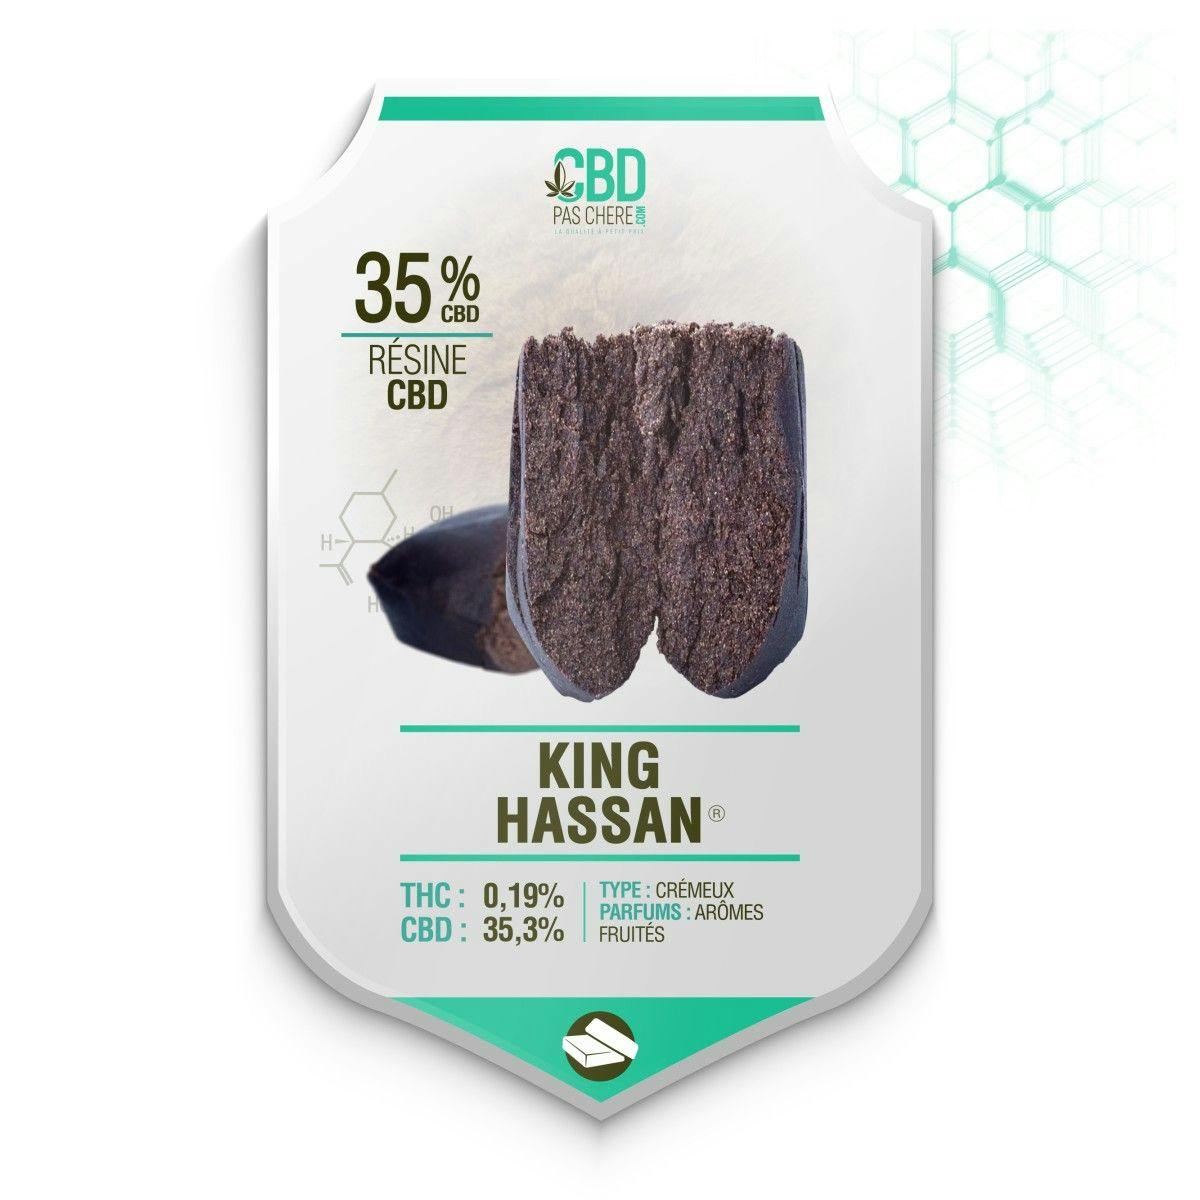 King Hassan CBD 35.3% - Cbdpaschere